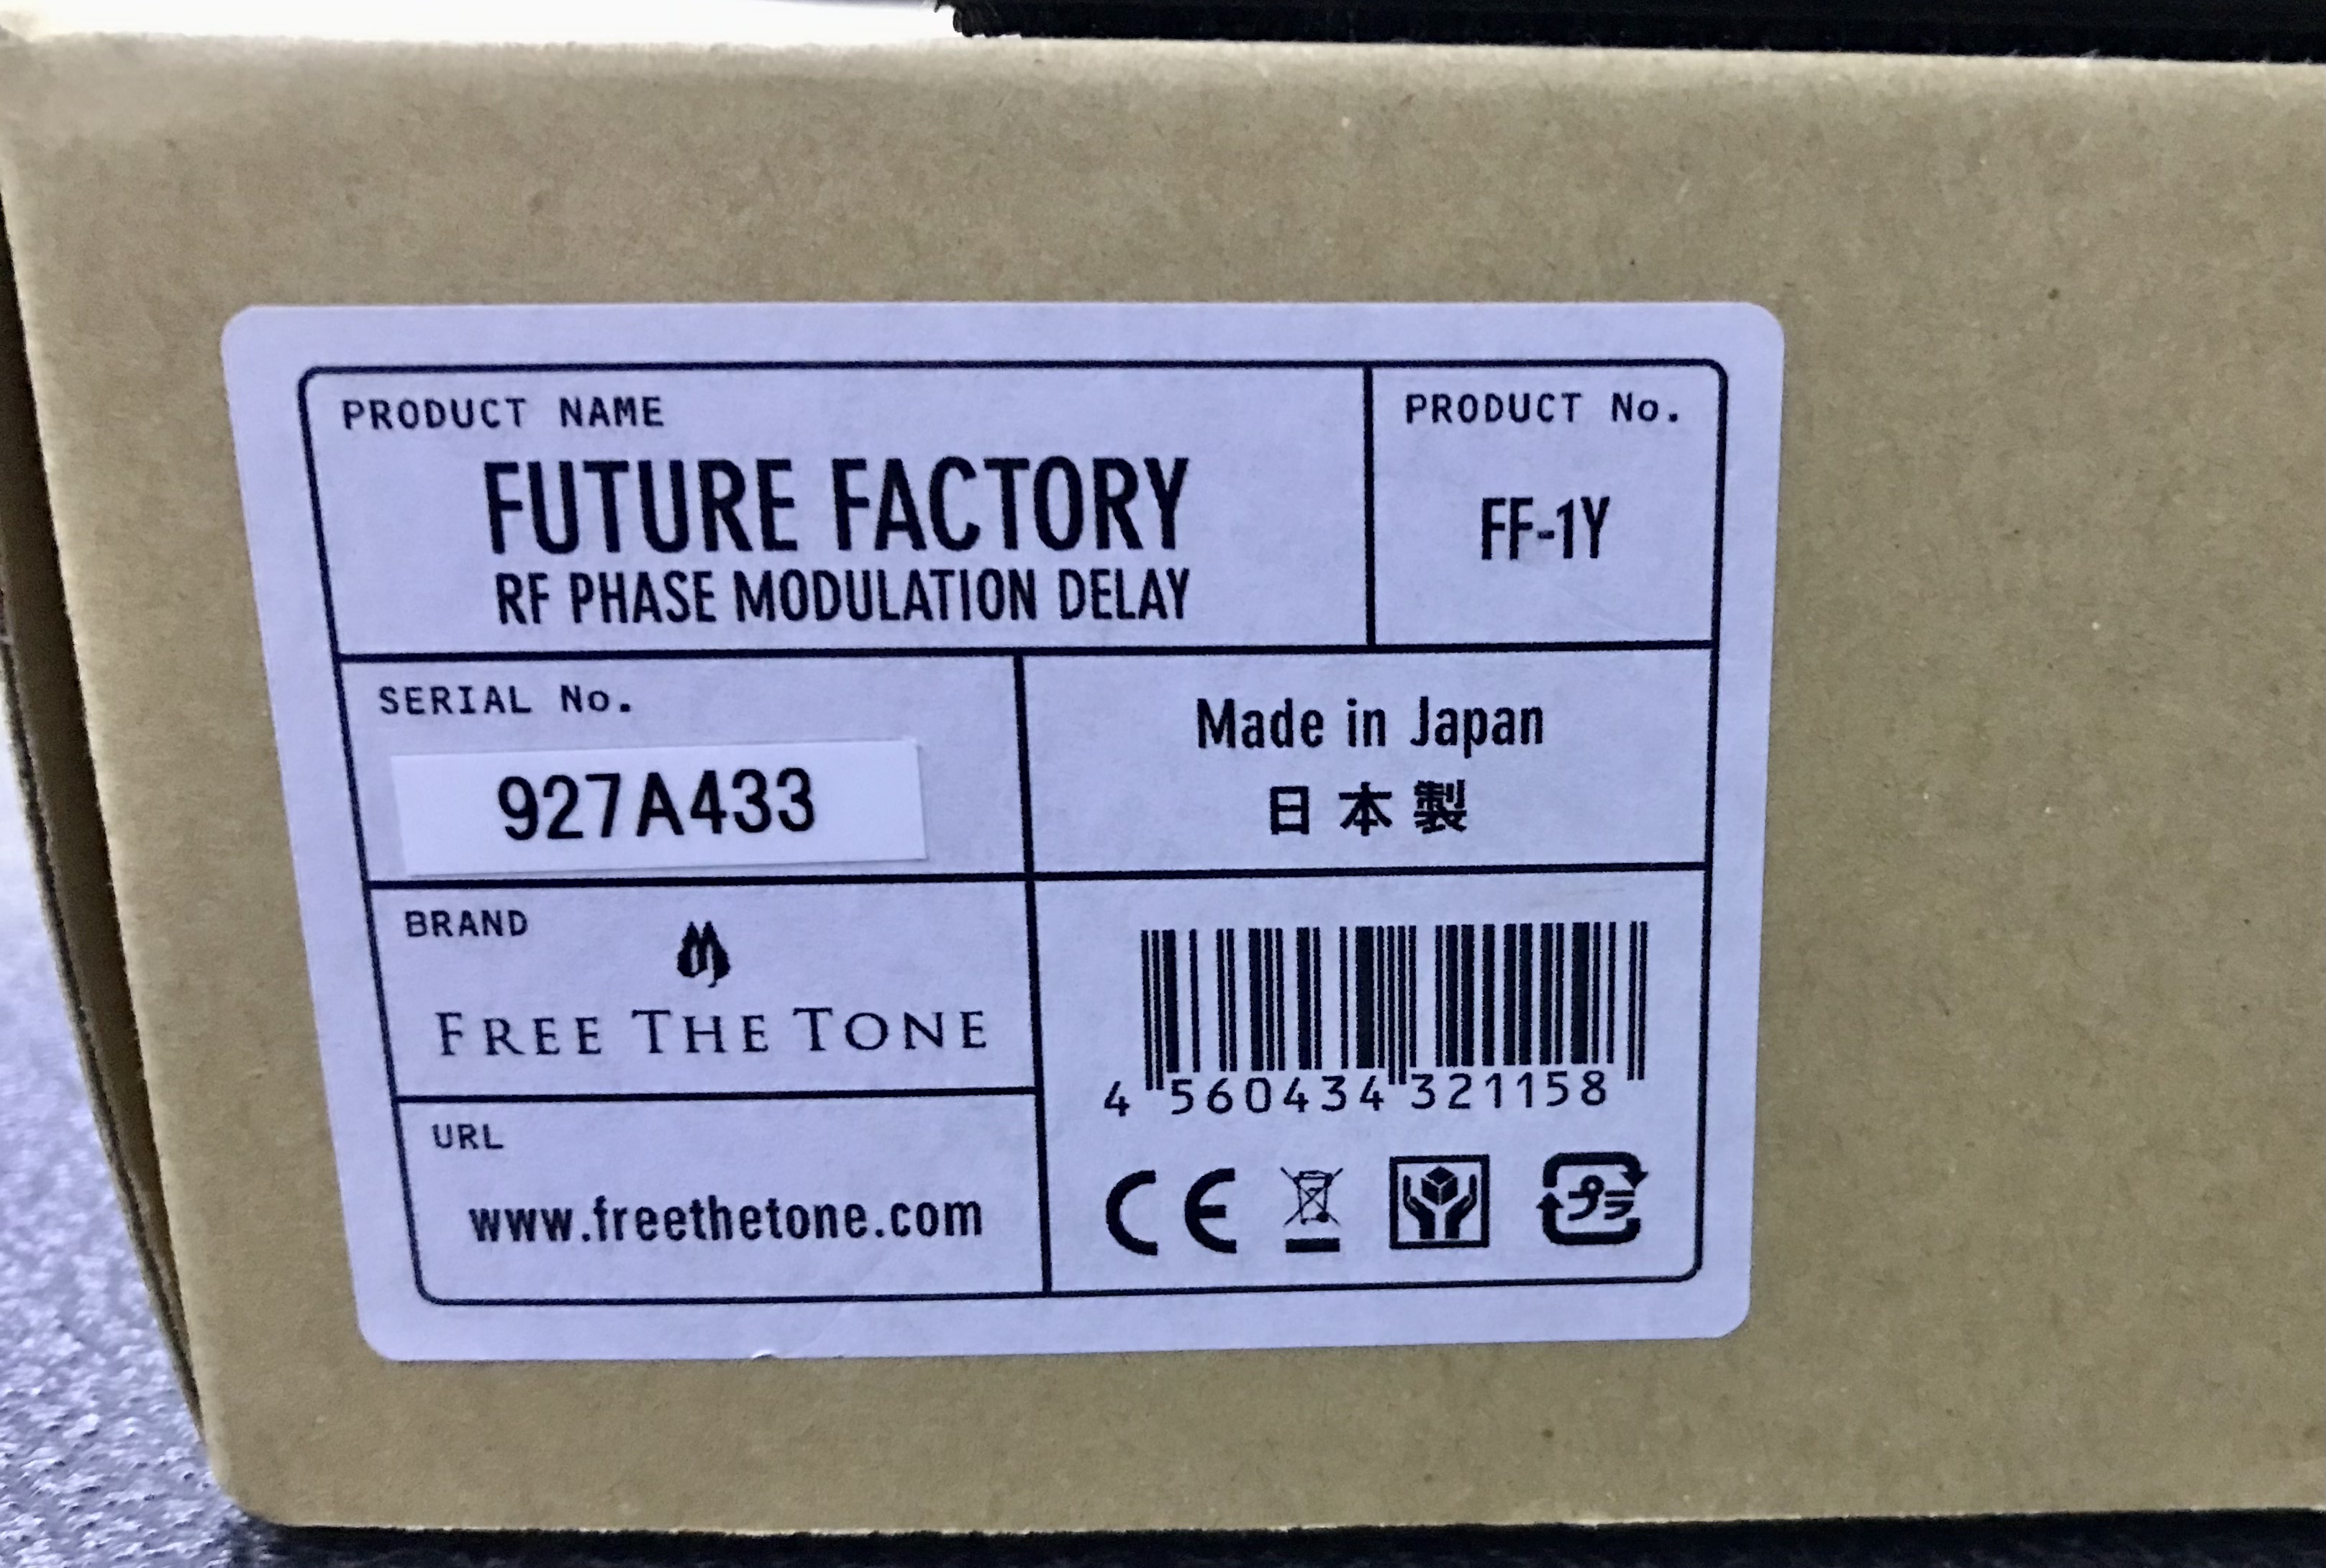 free the tone future factory delay